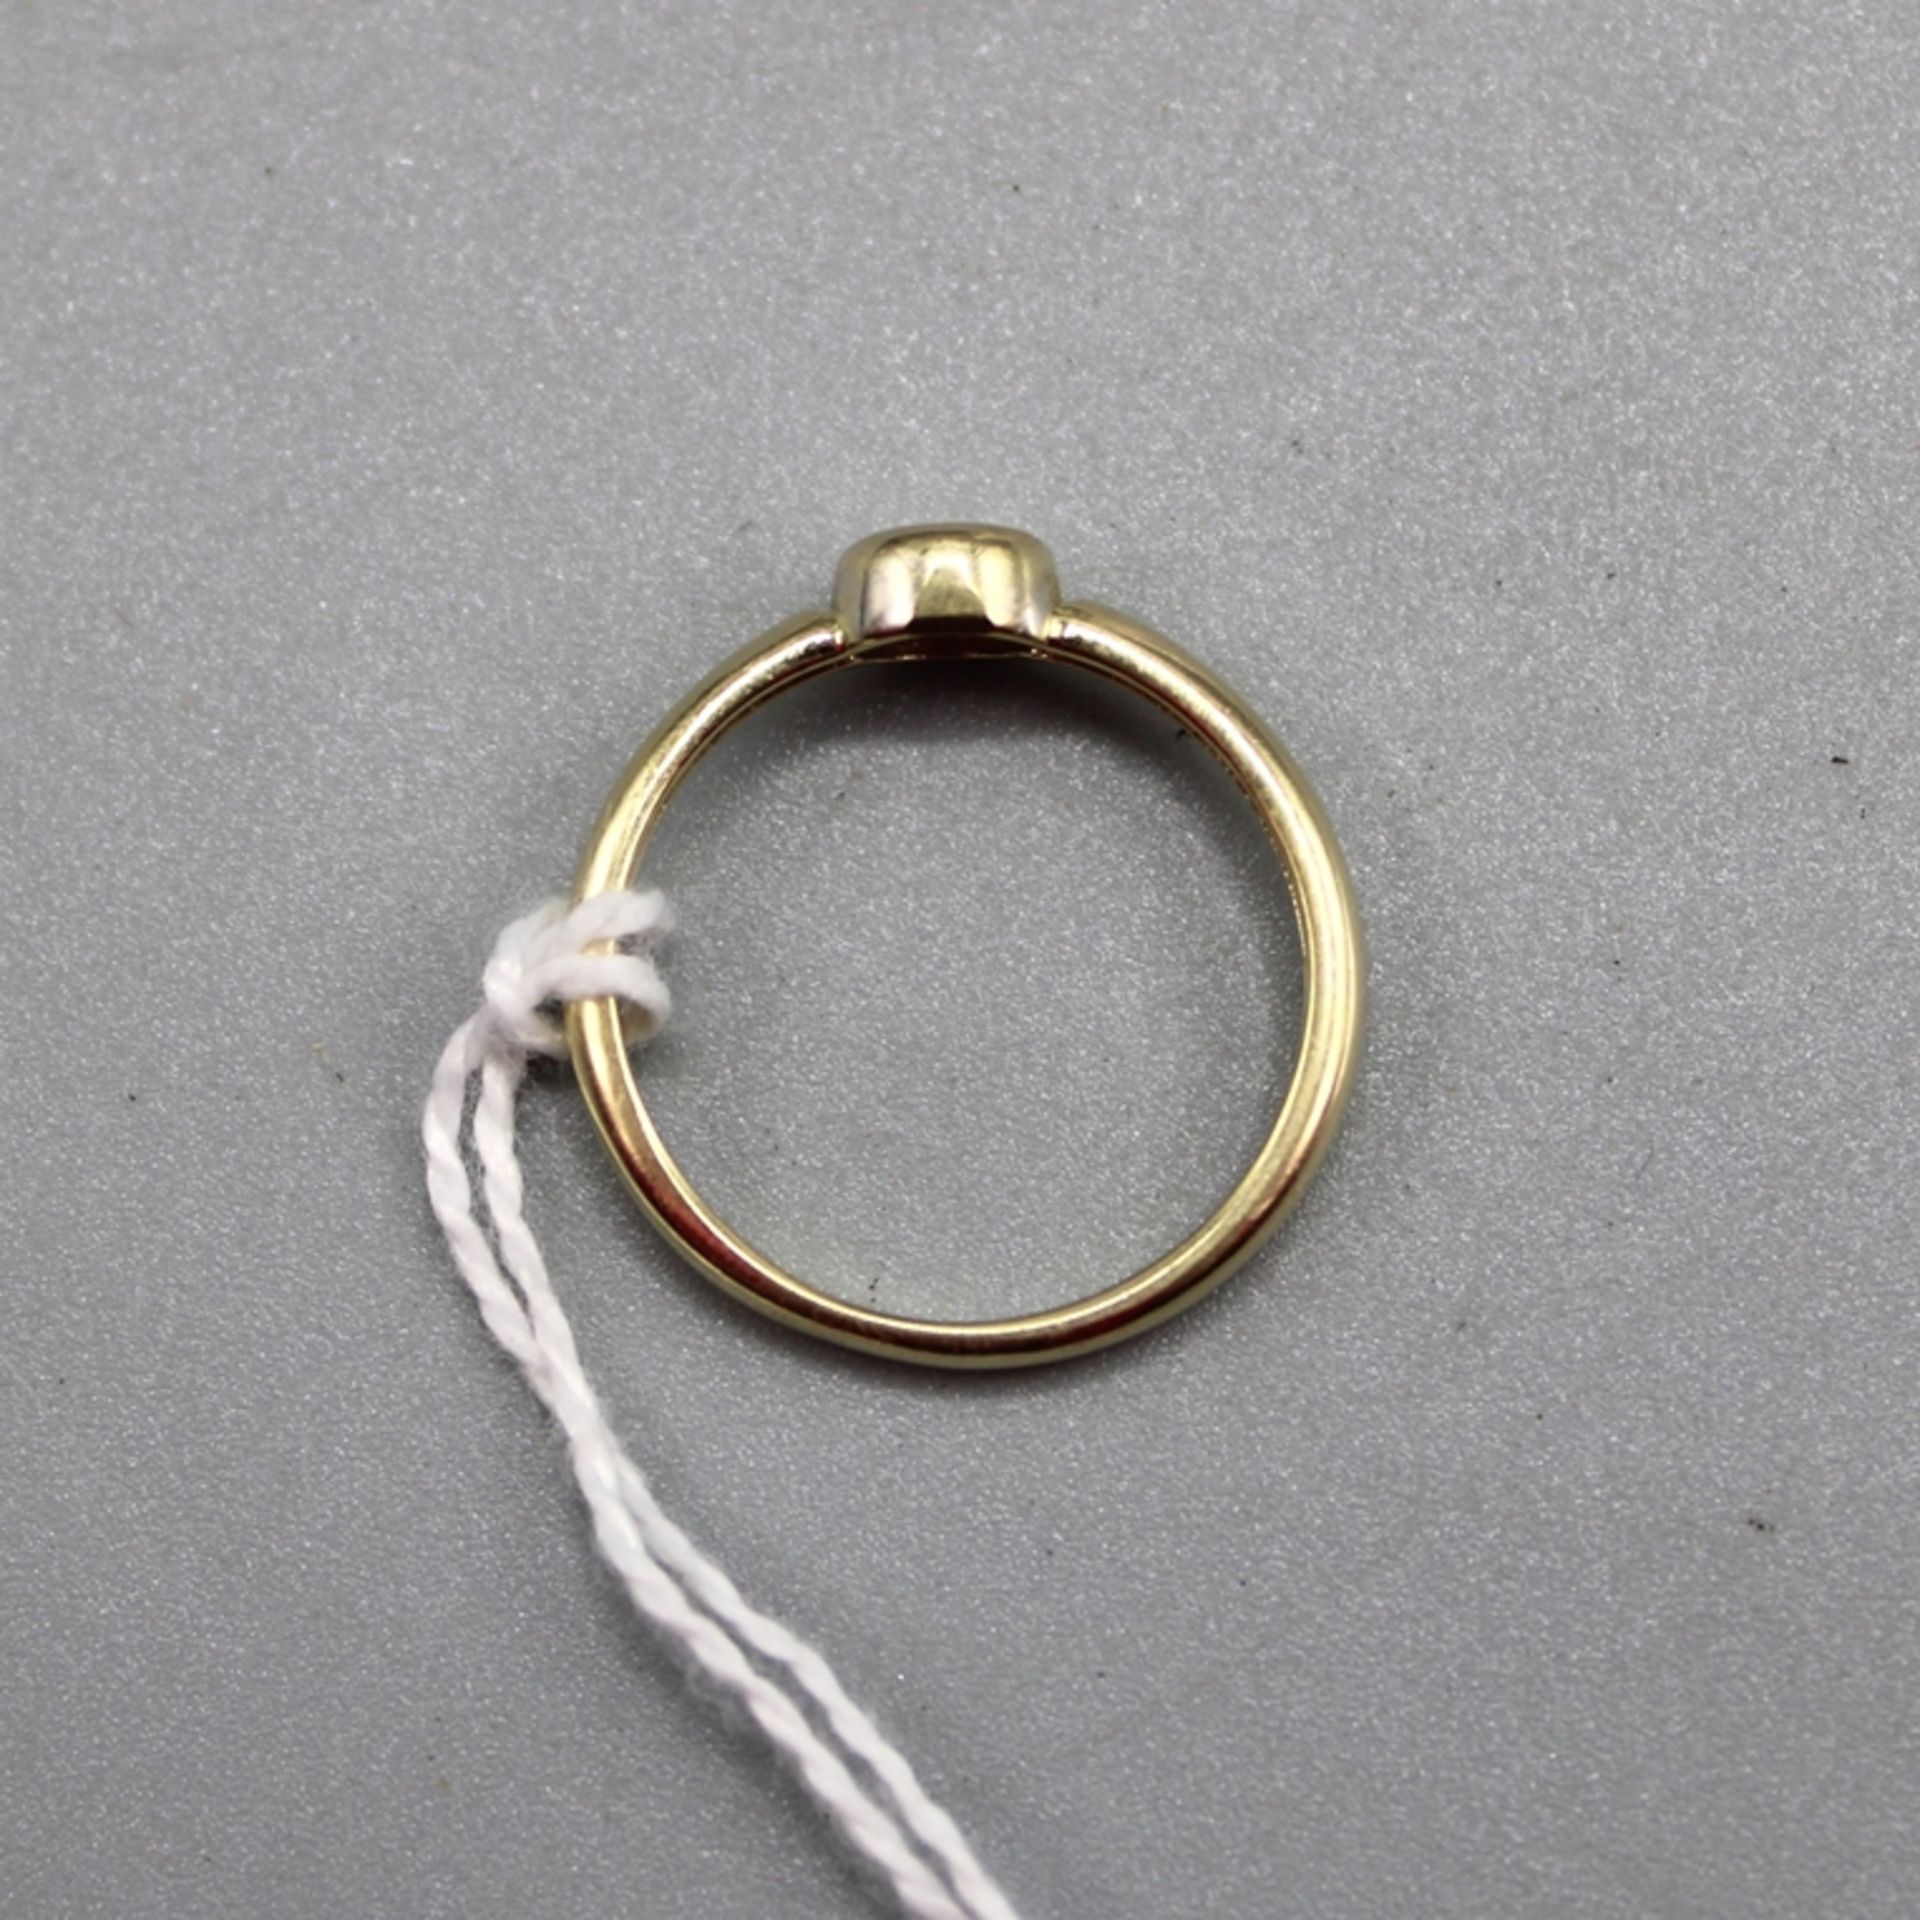 Brillantring 0,1 ct. Gold 585, Ring Ø ca. 17 mm, 2 g - Image 2 of 2